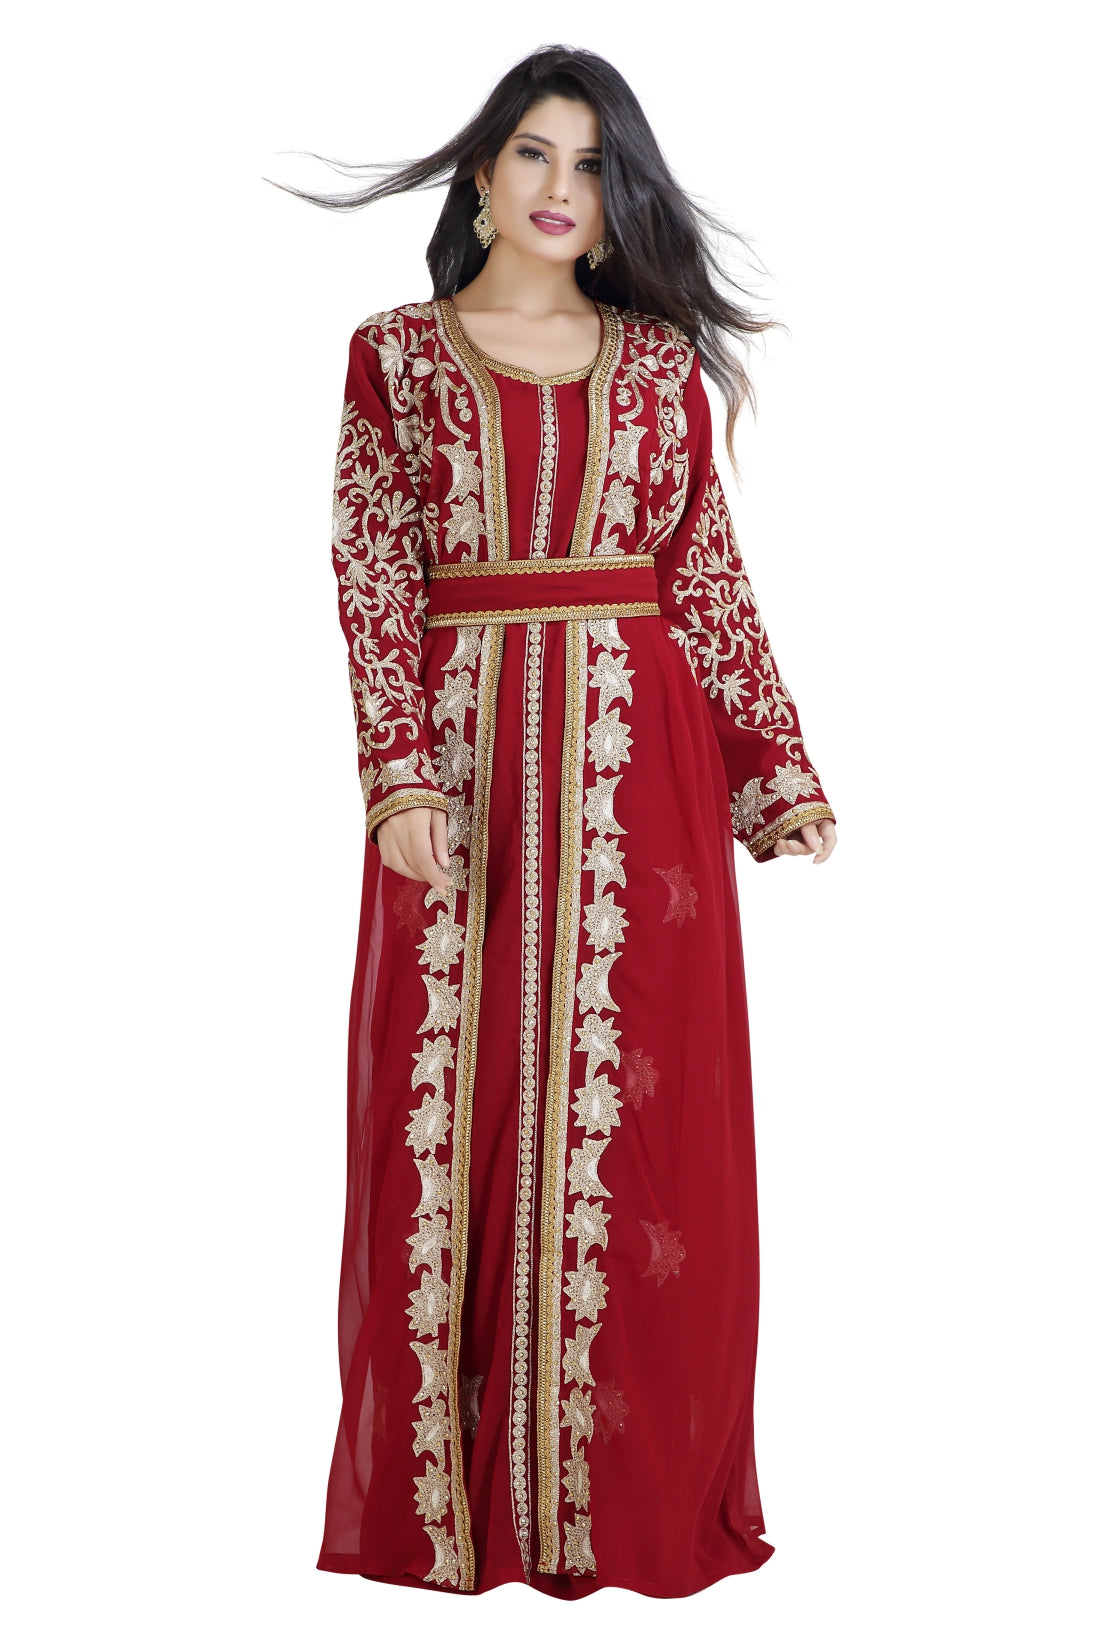 arabian dresses